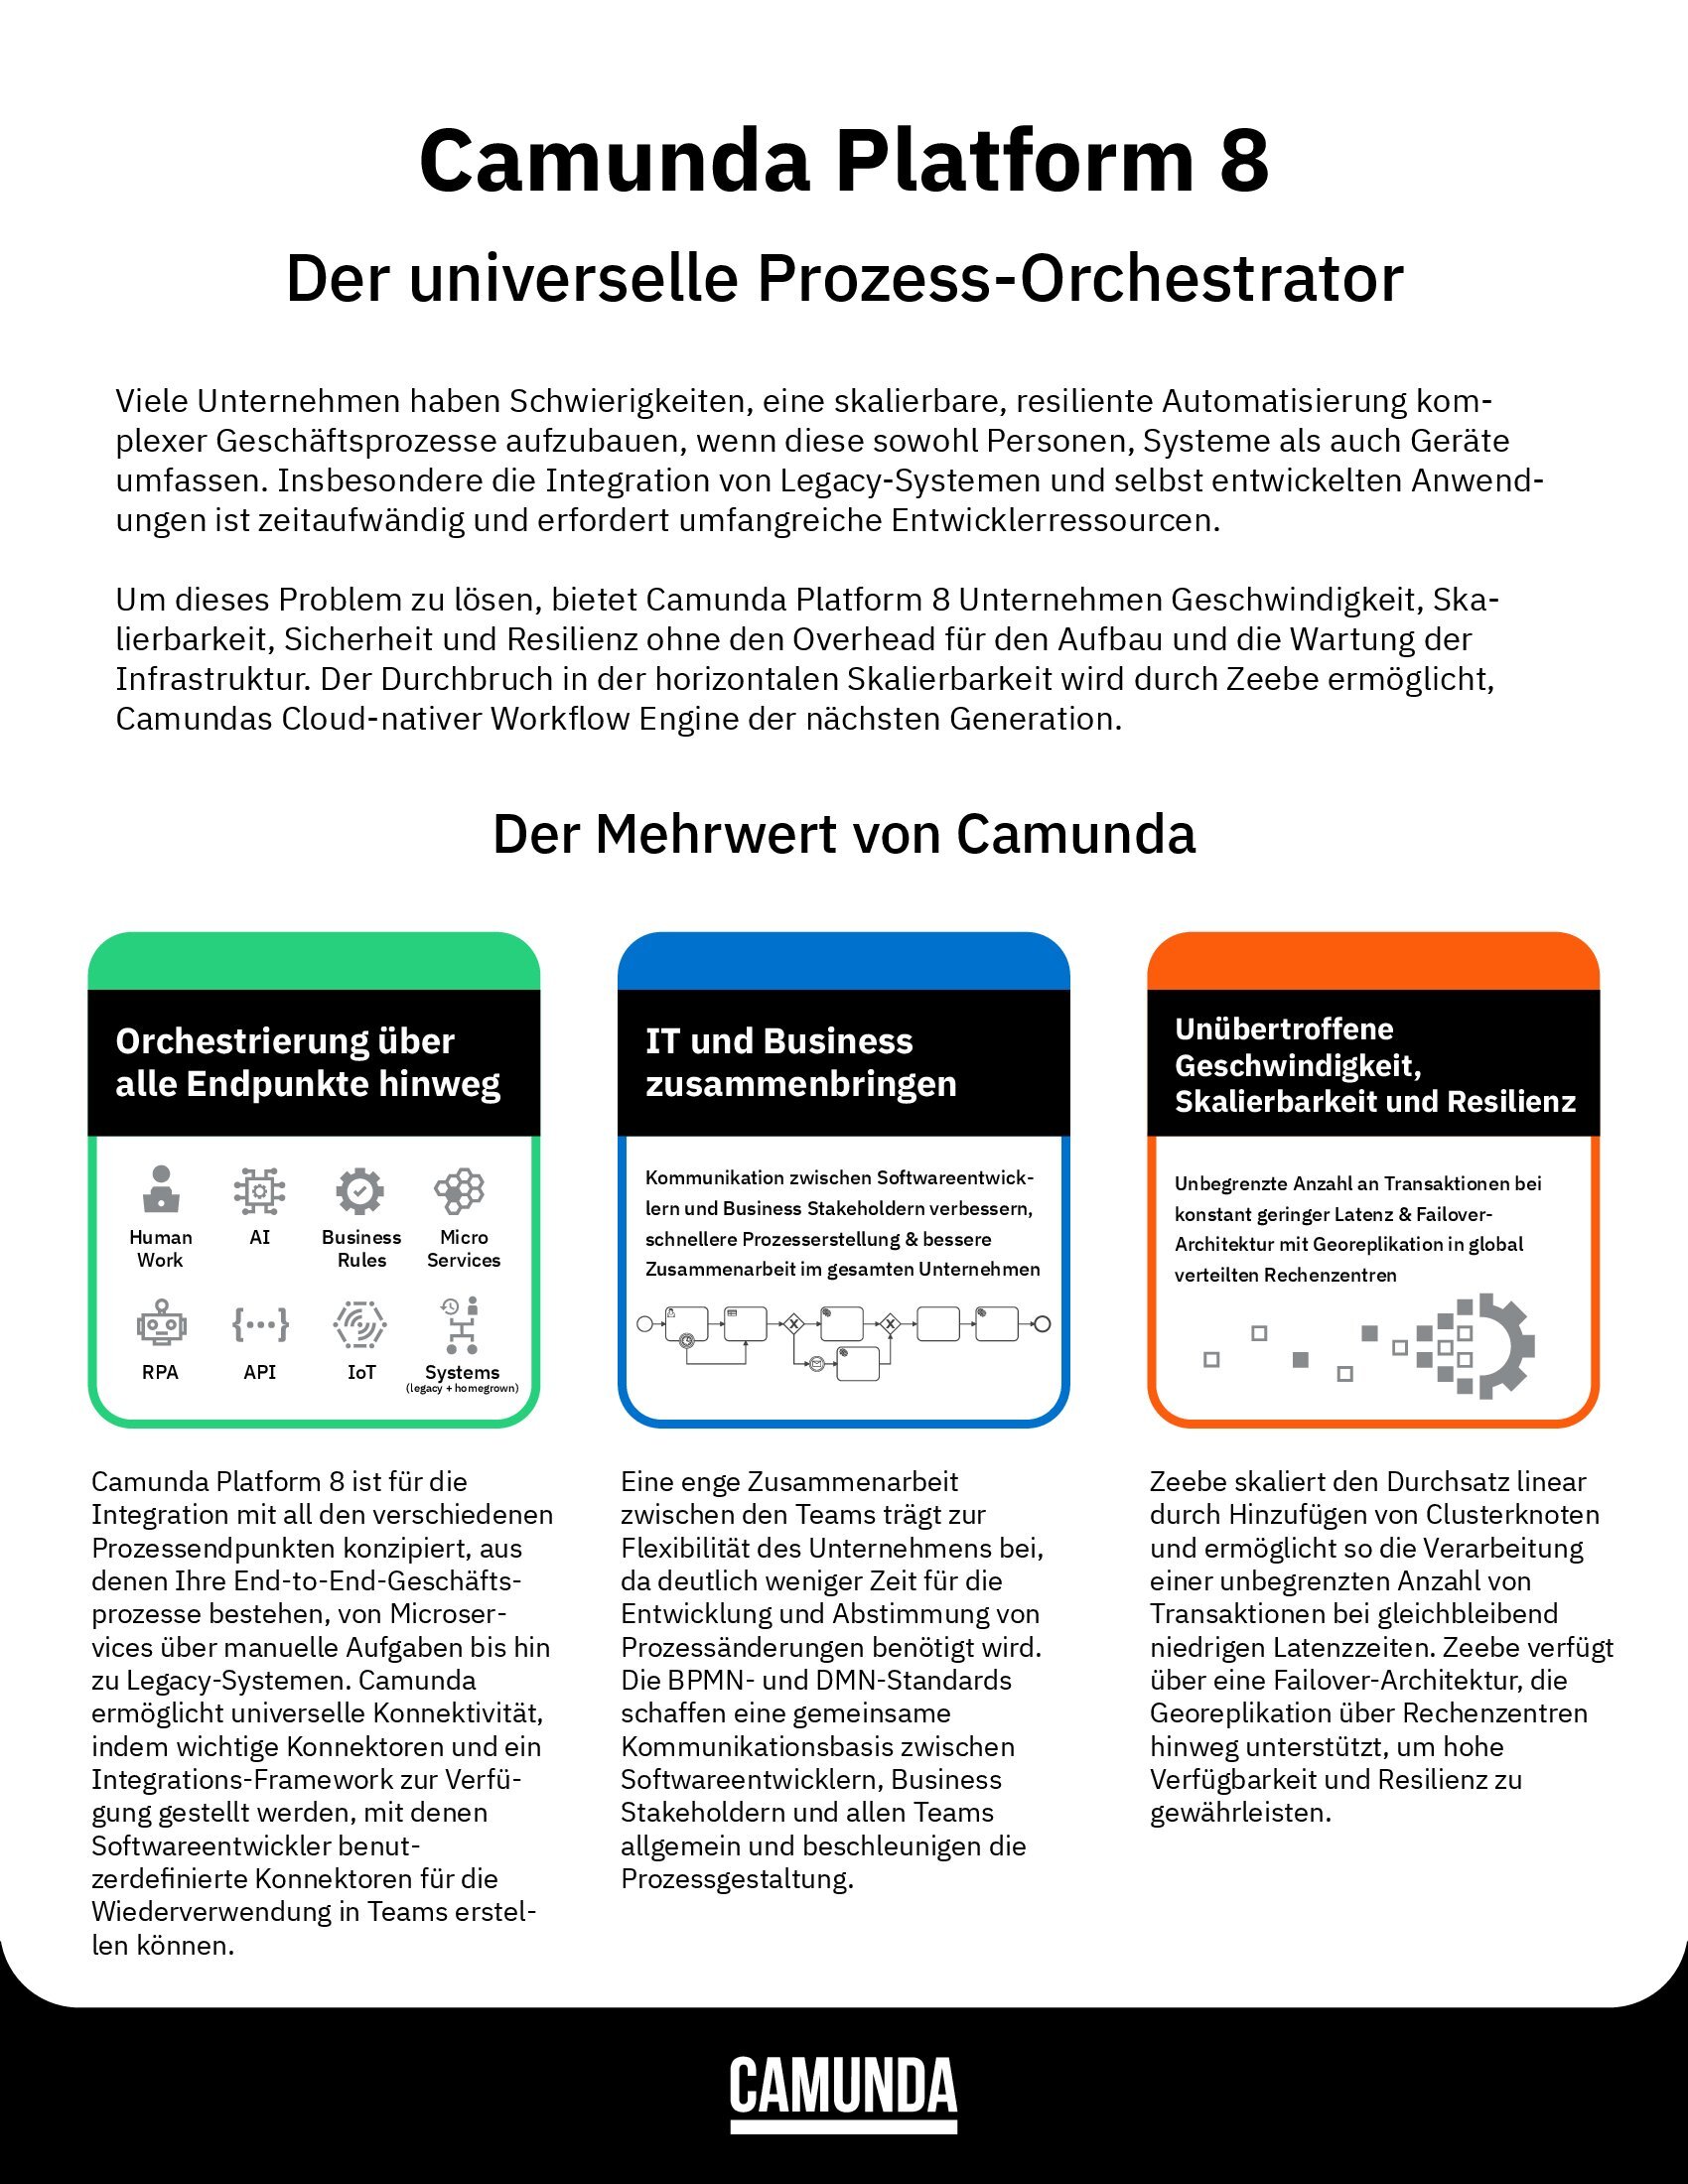 Camunda Platform 8 – Der universelle Prozess-Orchestrator